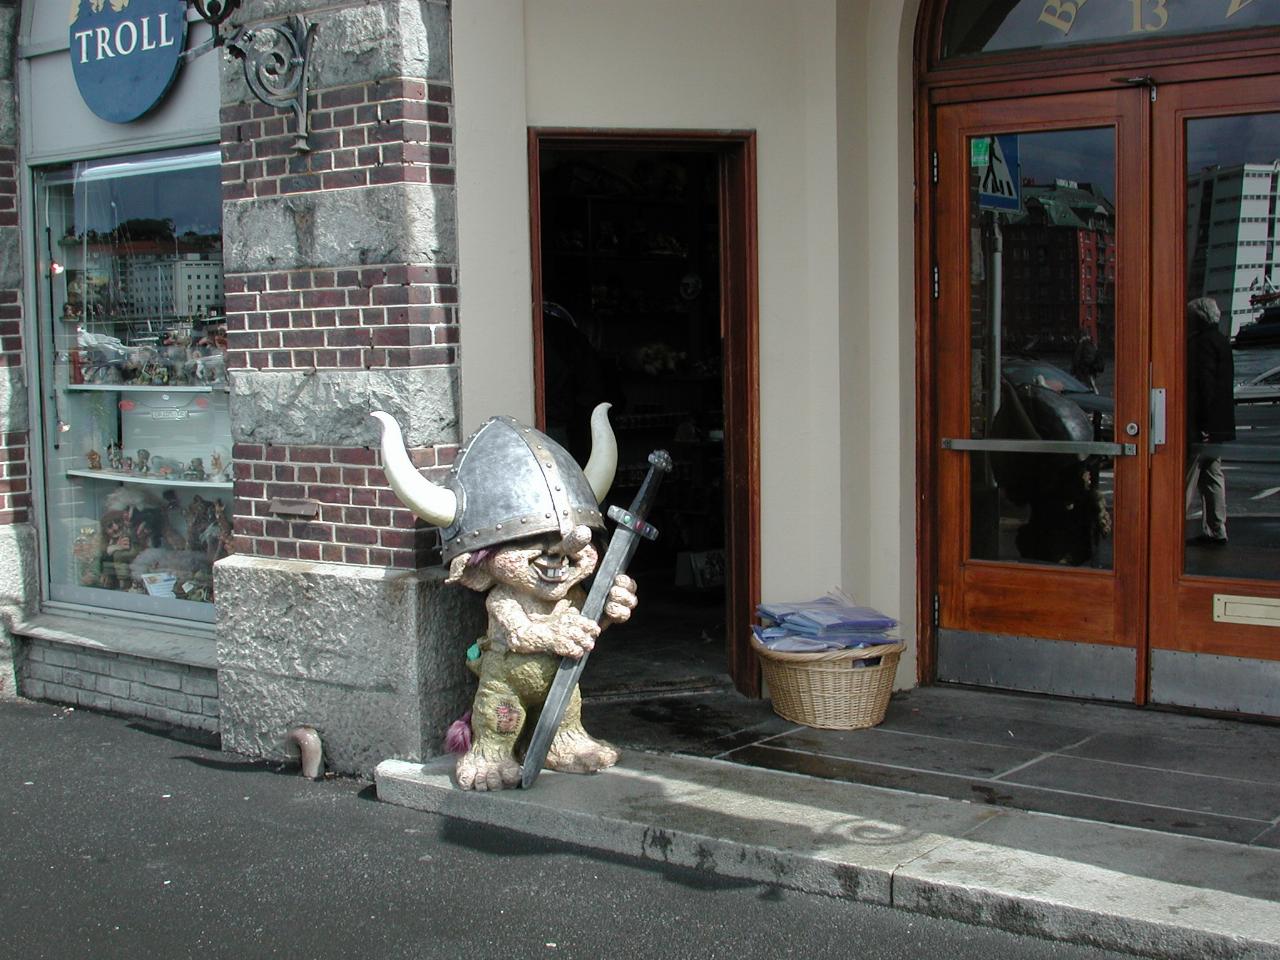 KPLU Viking Jazz: Troll standing guard over troll shop at Bryggen, Bergen, Norway